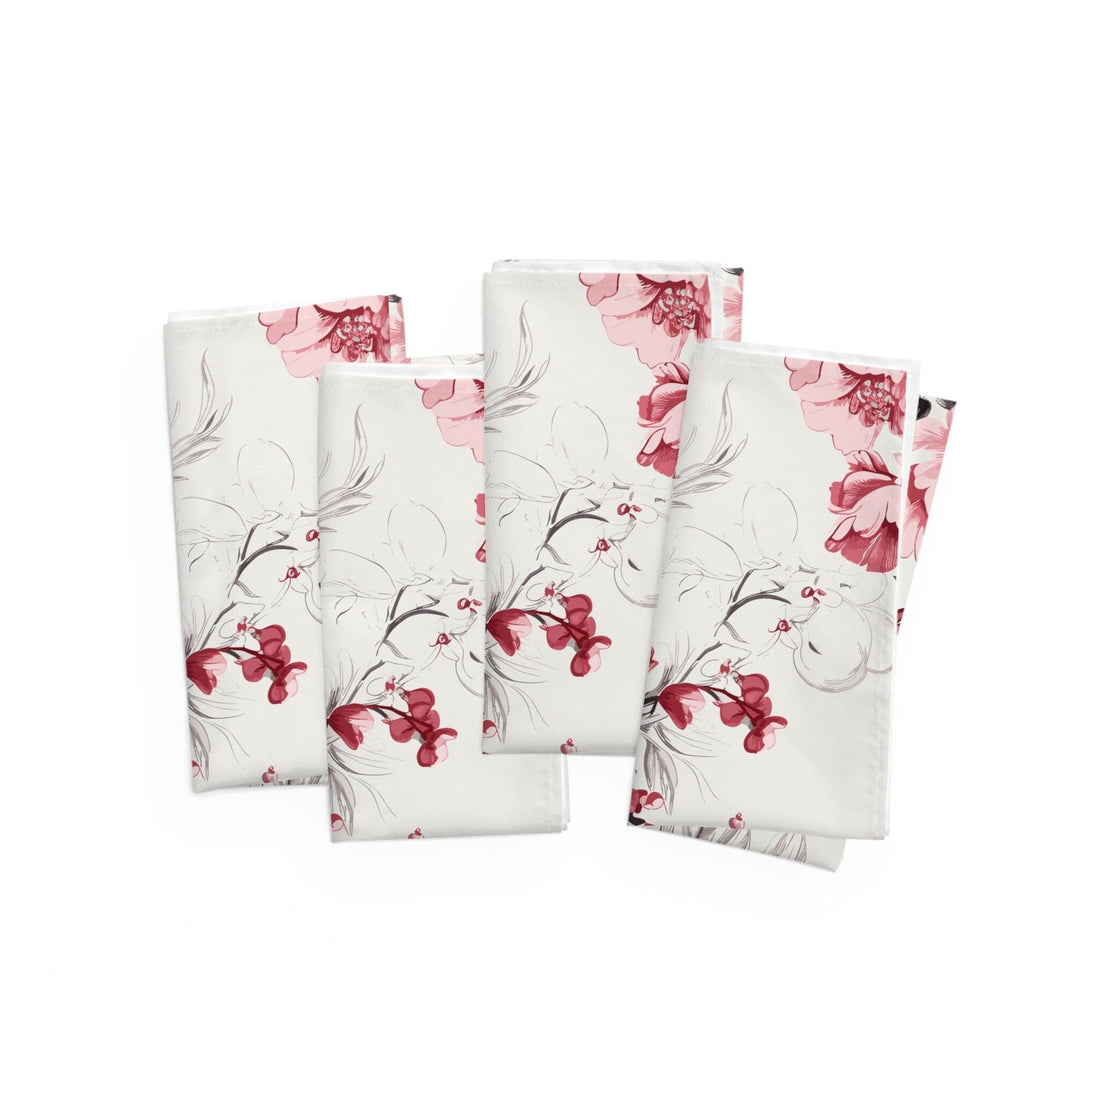 Kate McEnroe New York 4 - Piece Set Chinoiserie Botanical Toile Floral Cranberry Red, White Cloth Napkin, Country Farmhouse Table Linen, Wedding Napkins - 132982823Napkins53700809840491352791